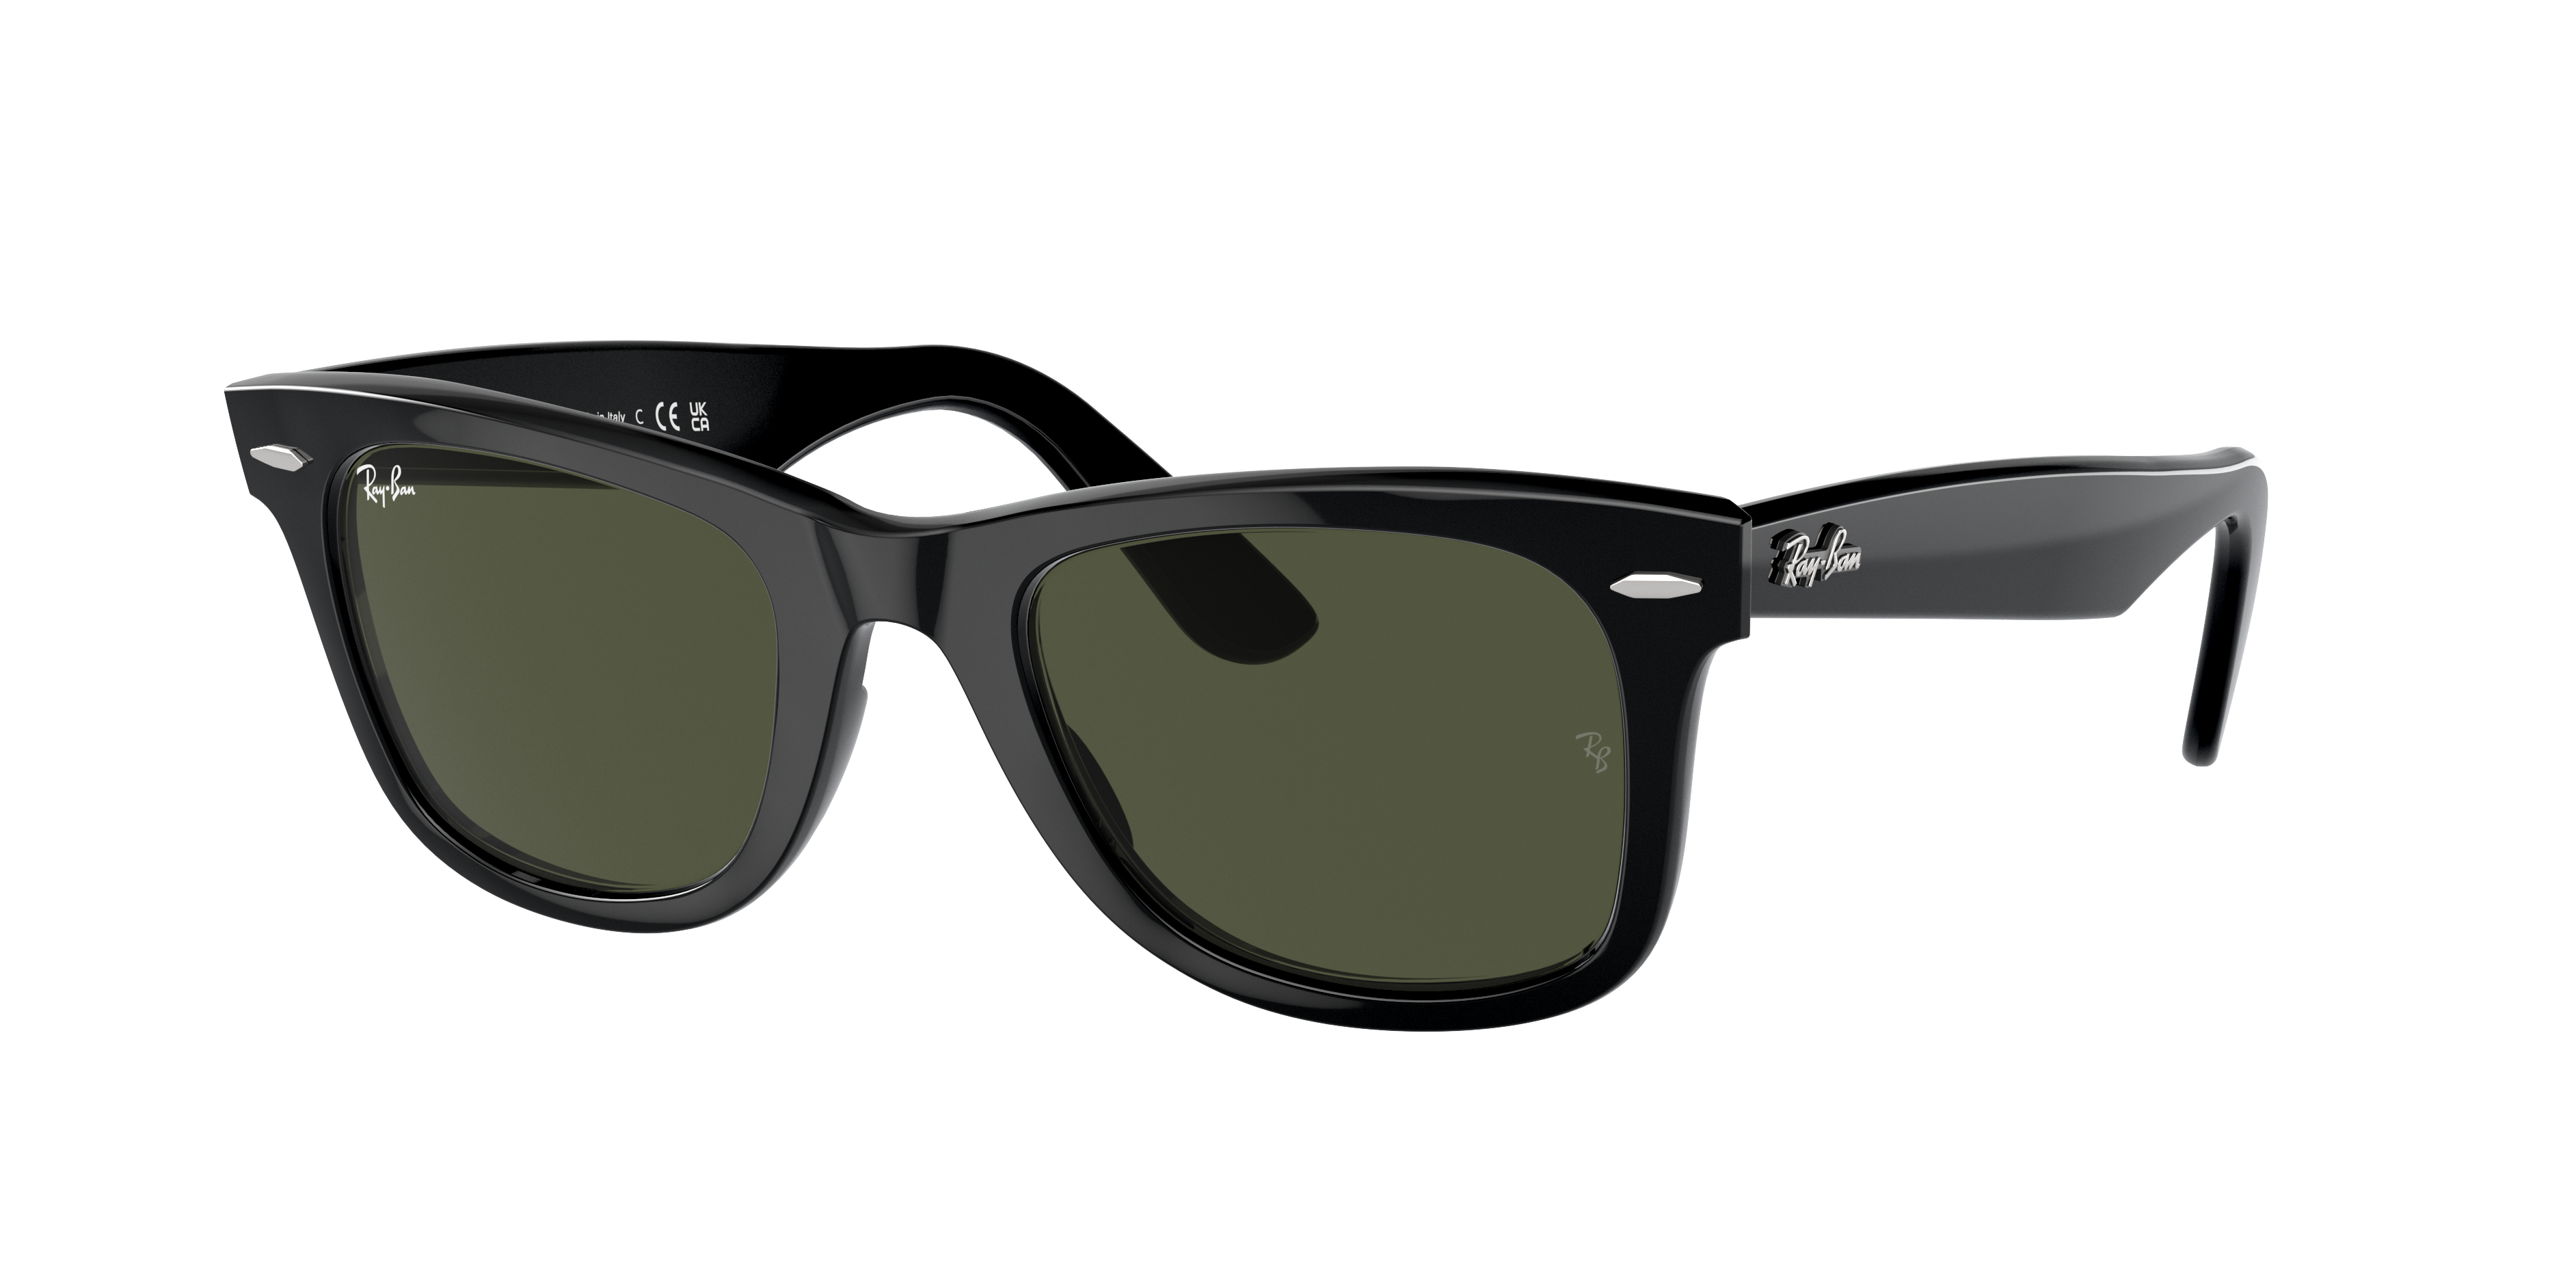 Tub welzijn Publicatie Original Wayfarer Classic Sunglasses in Black and Green | Ray-Ban®